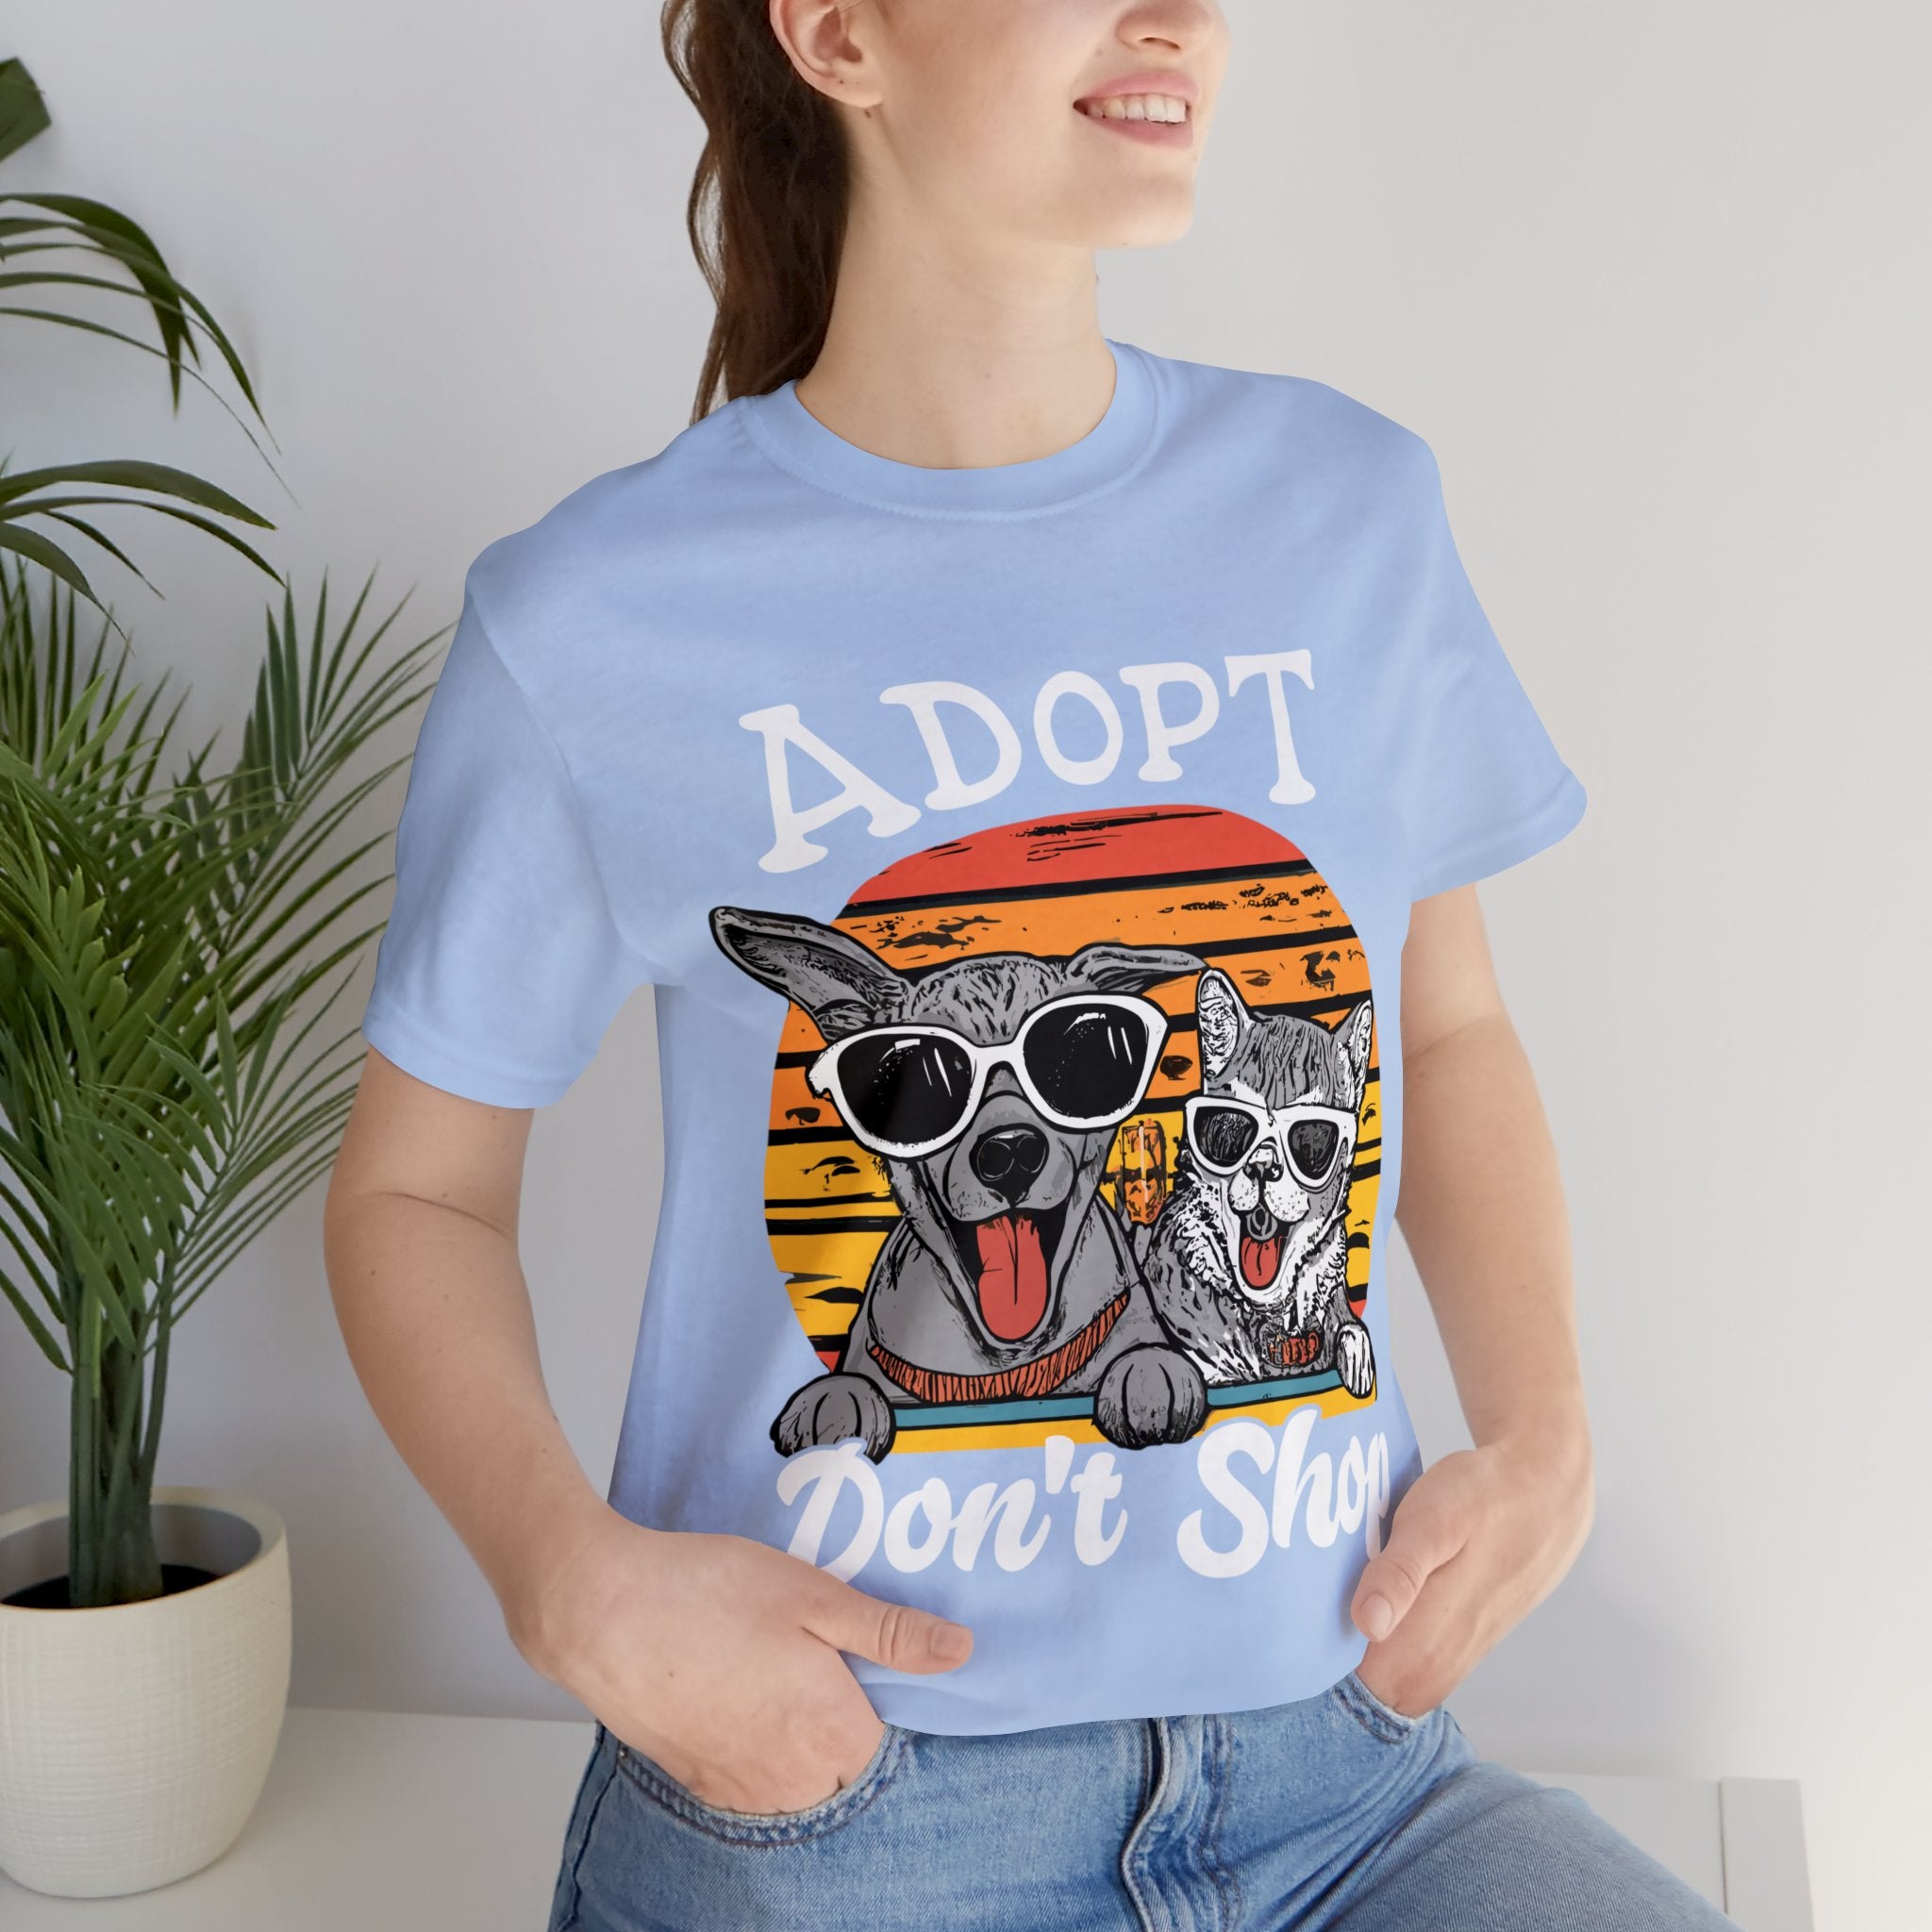 Adopt Don't Shop